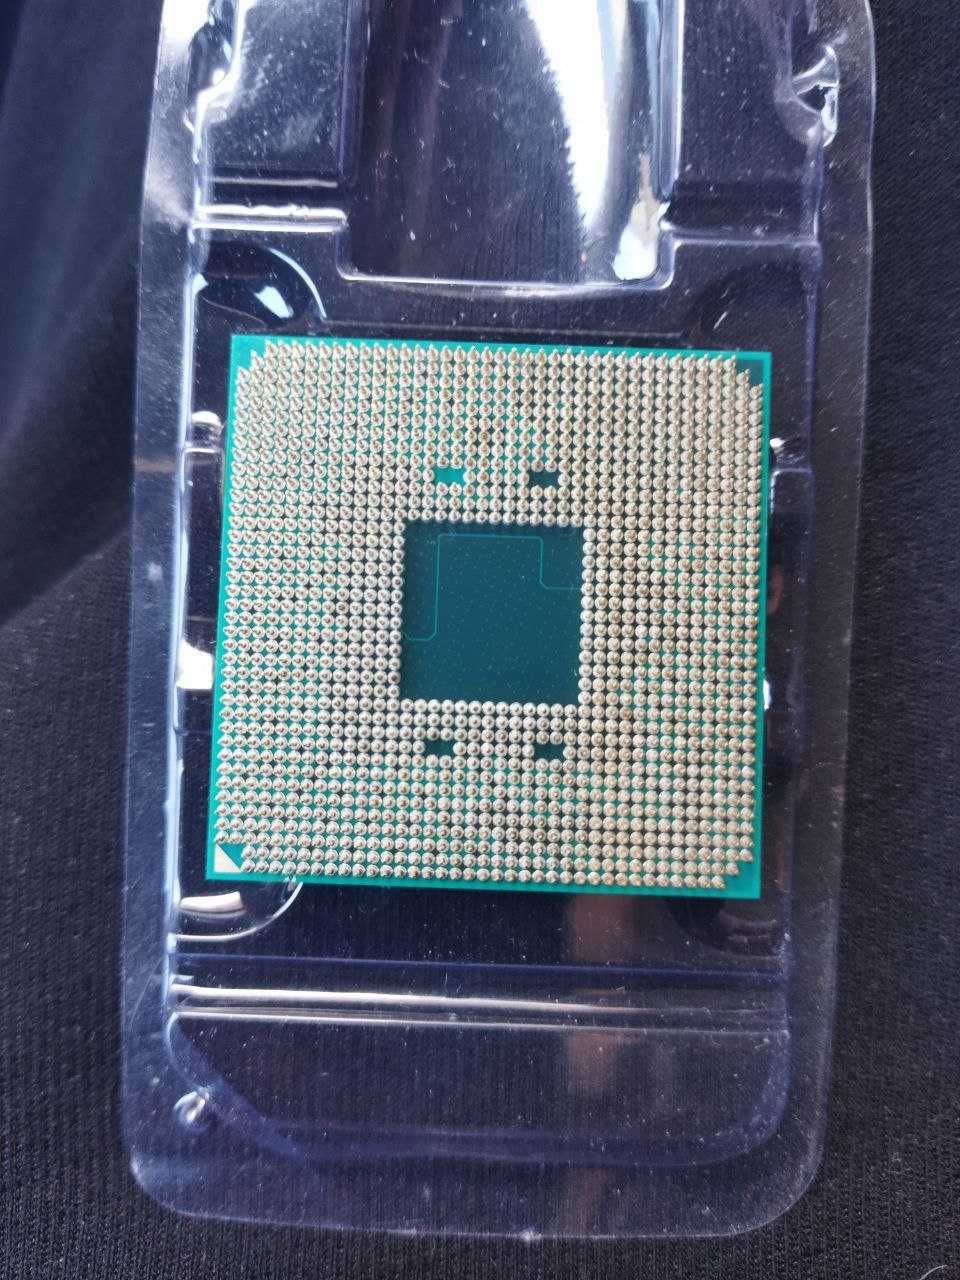 Процесор AM4 AMD Ryzen 5 PRO 3400G 3.7-4.2GHz